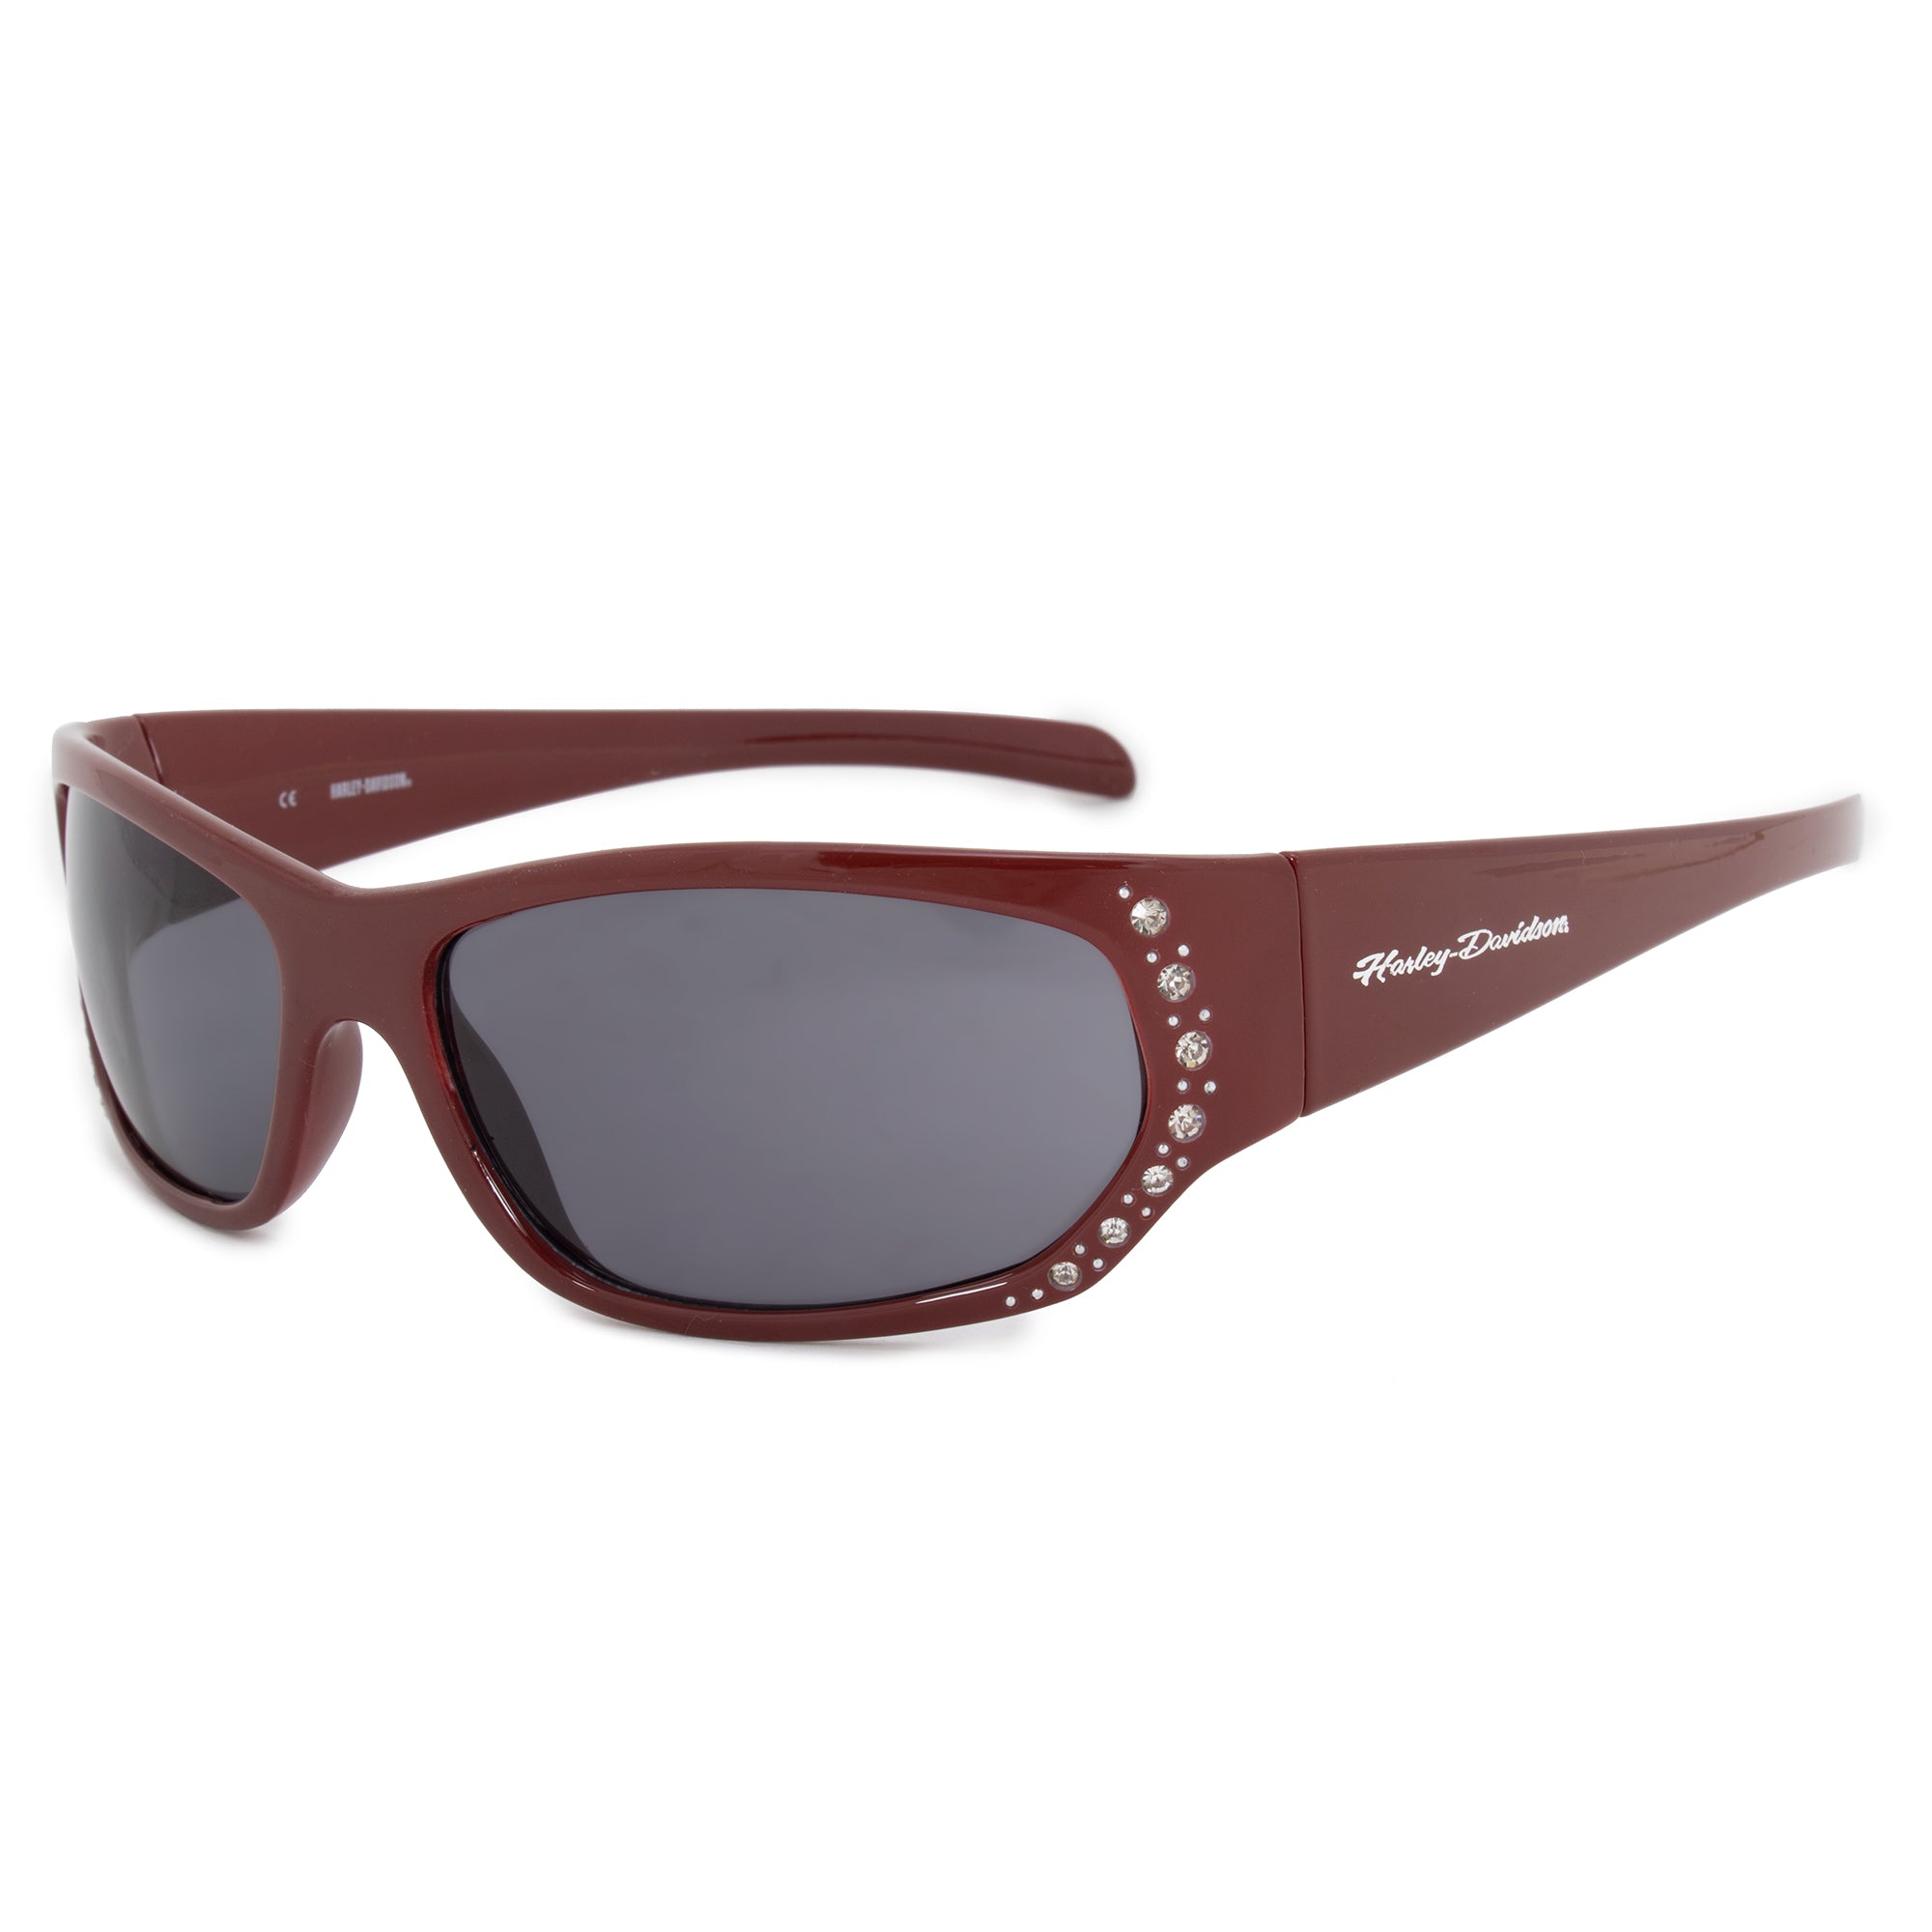 Harley Davidson Sports Sunglasses HDS5024 RD 3 59